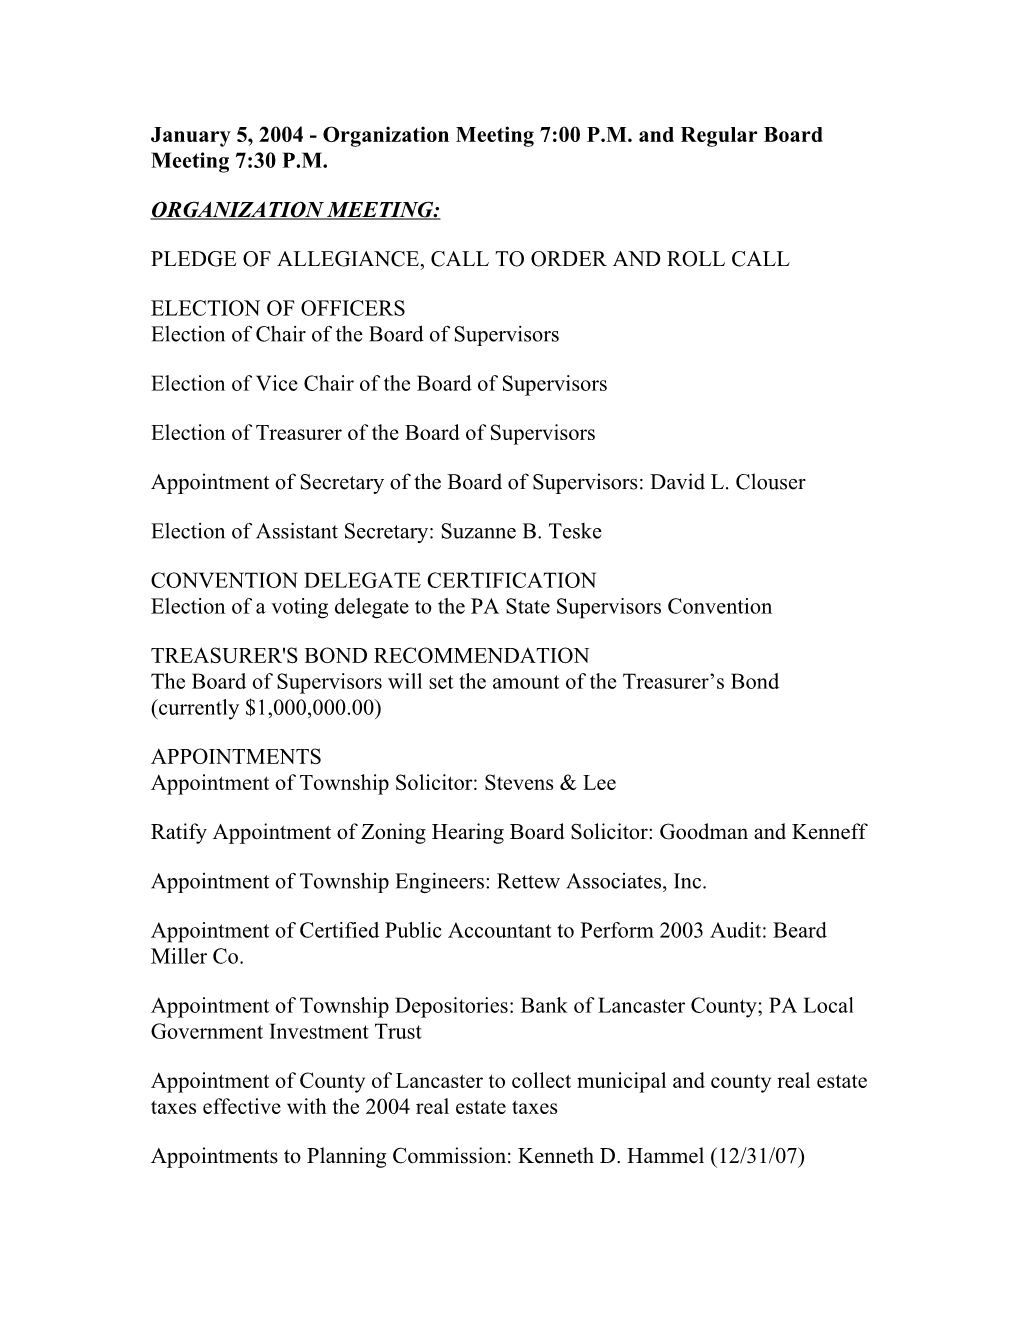 January 5, 2004 - Organization Meeting 7:00 P.M. and Regular Board Meeting 7:30 P.M